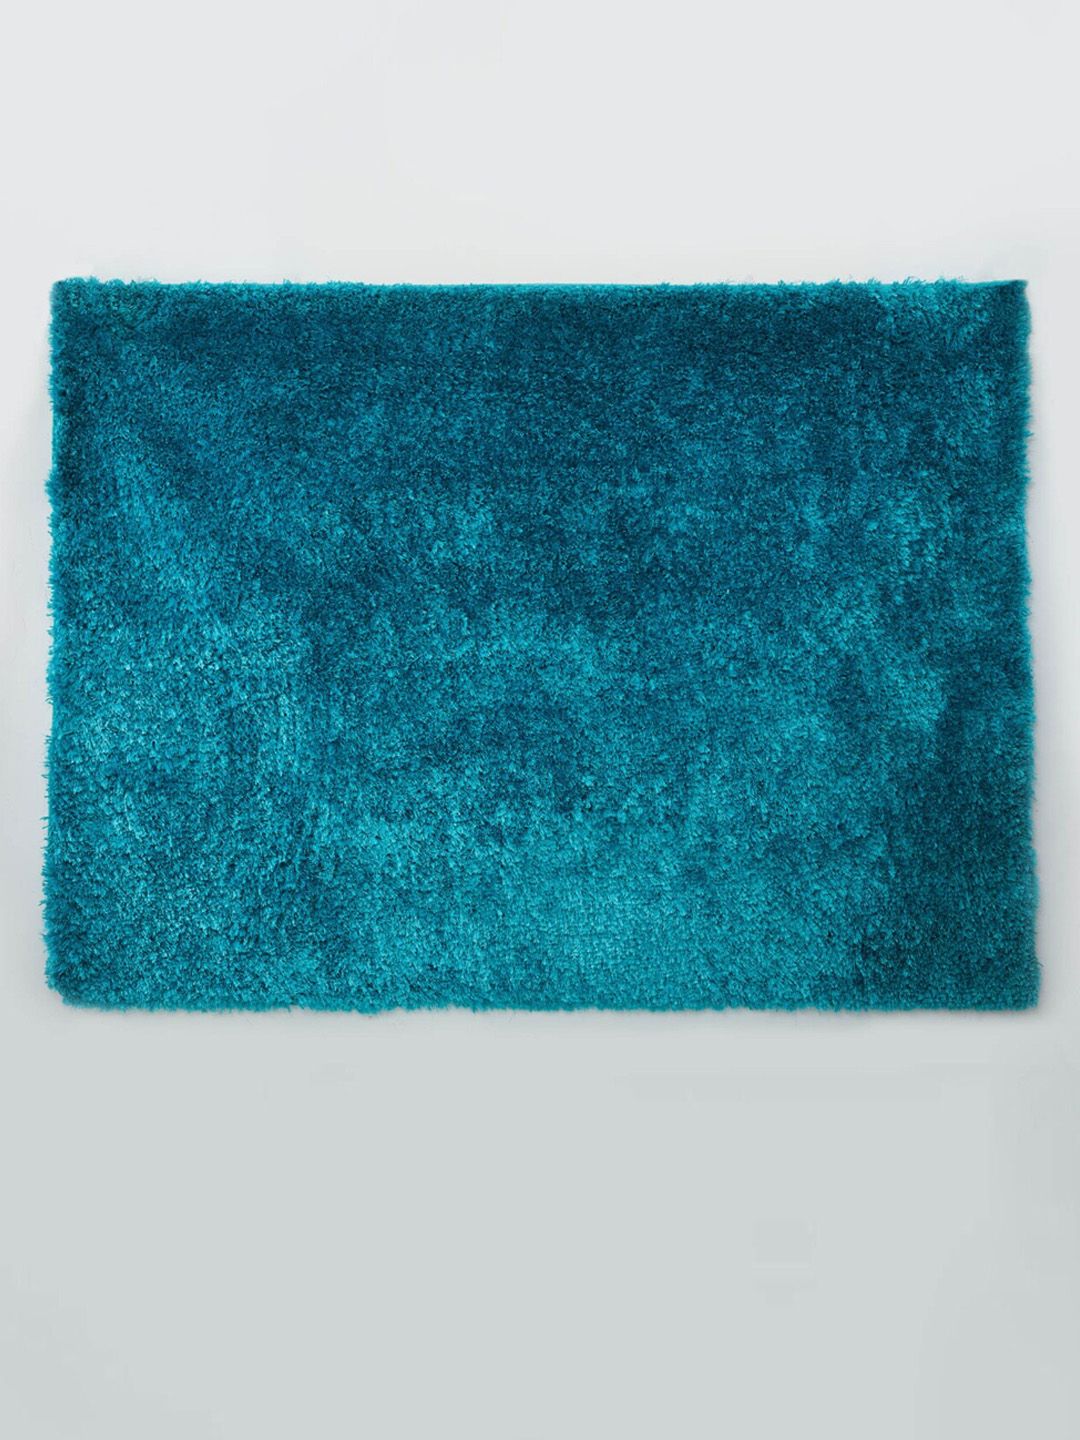 Home Centre Teal Blue Solid Eyelash Serena Rectangular Anti-Skid Shaggy Carpet Price in India